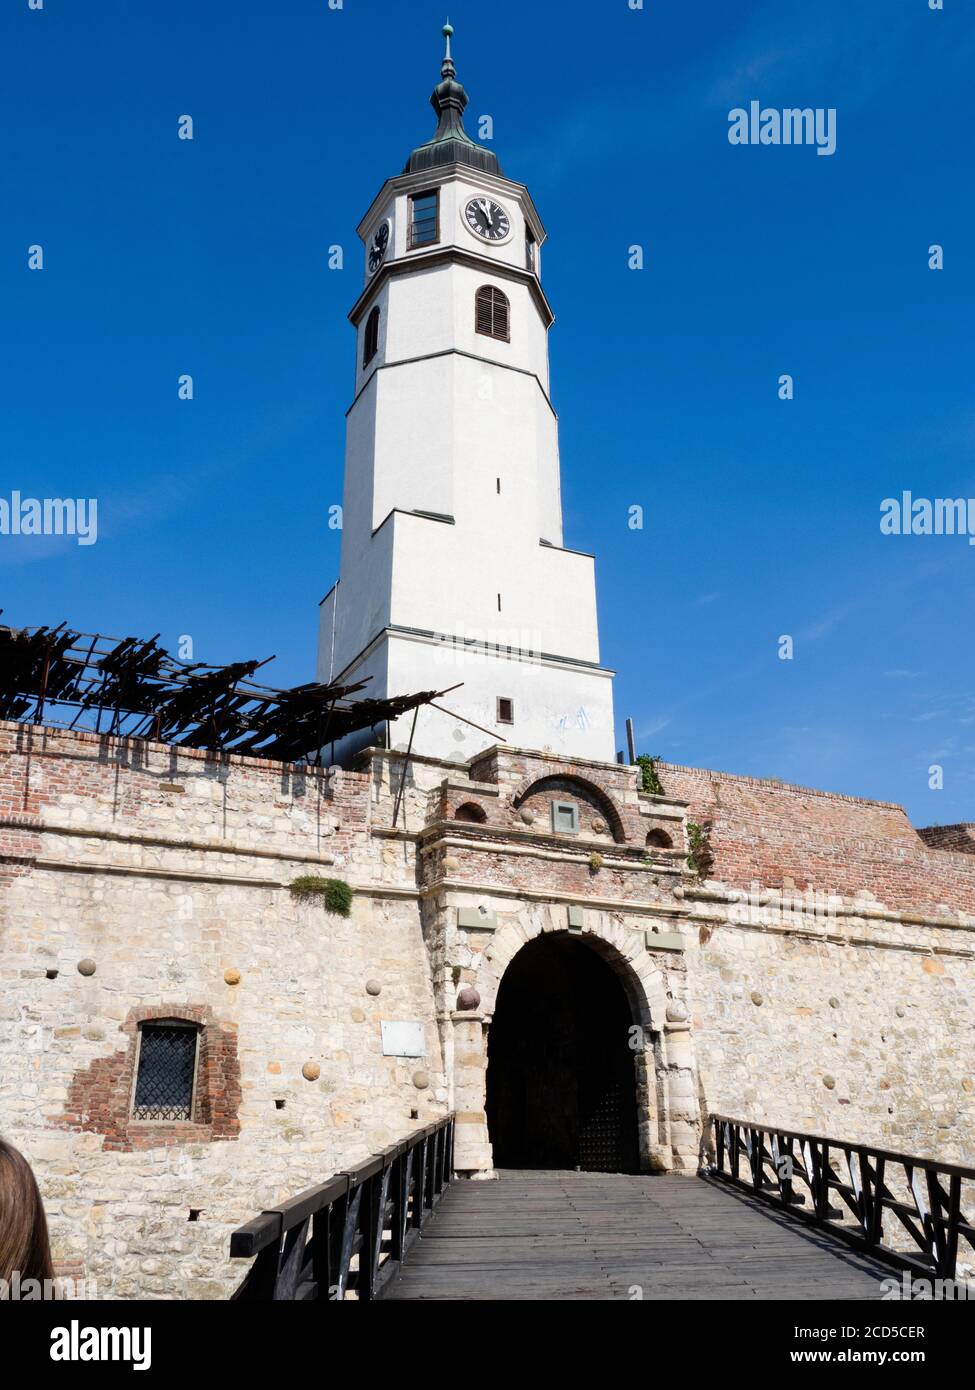 Stambol Gate with clock tower, Gates of Belgrade, Belgrade, Serbia Stock Photo